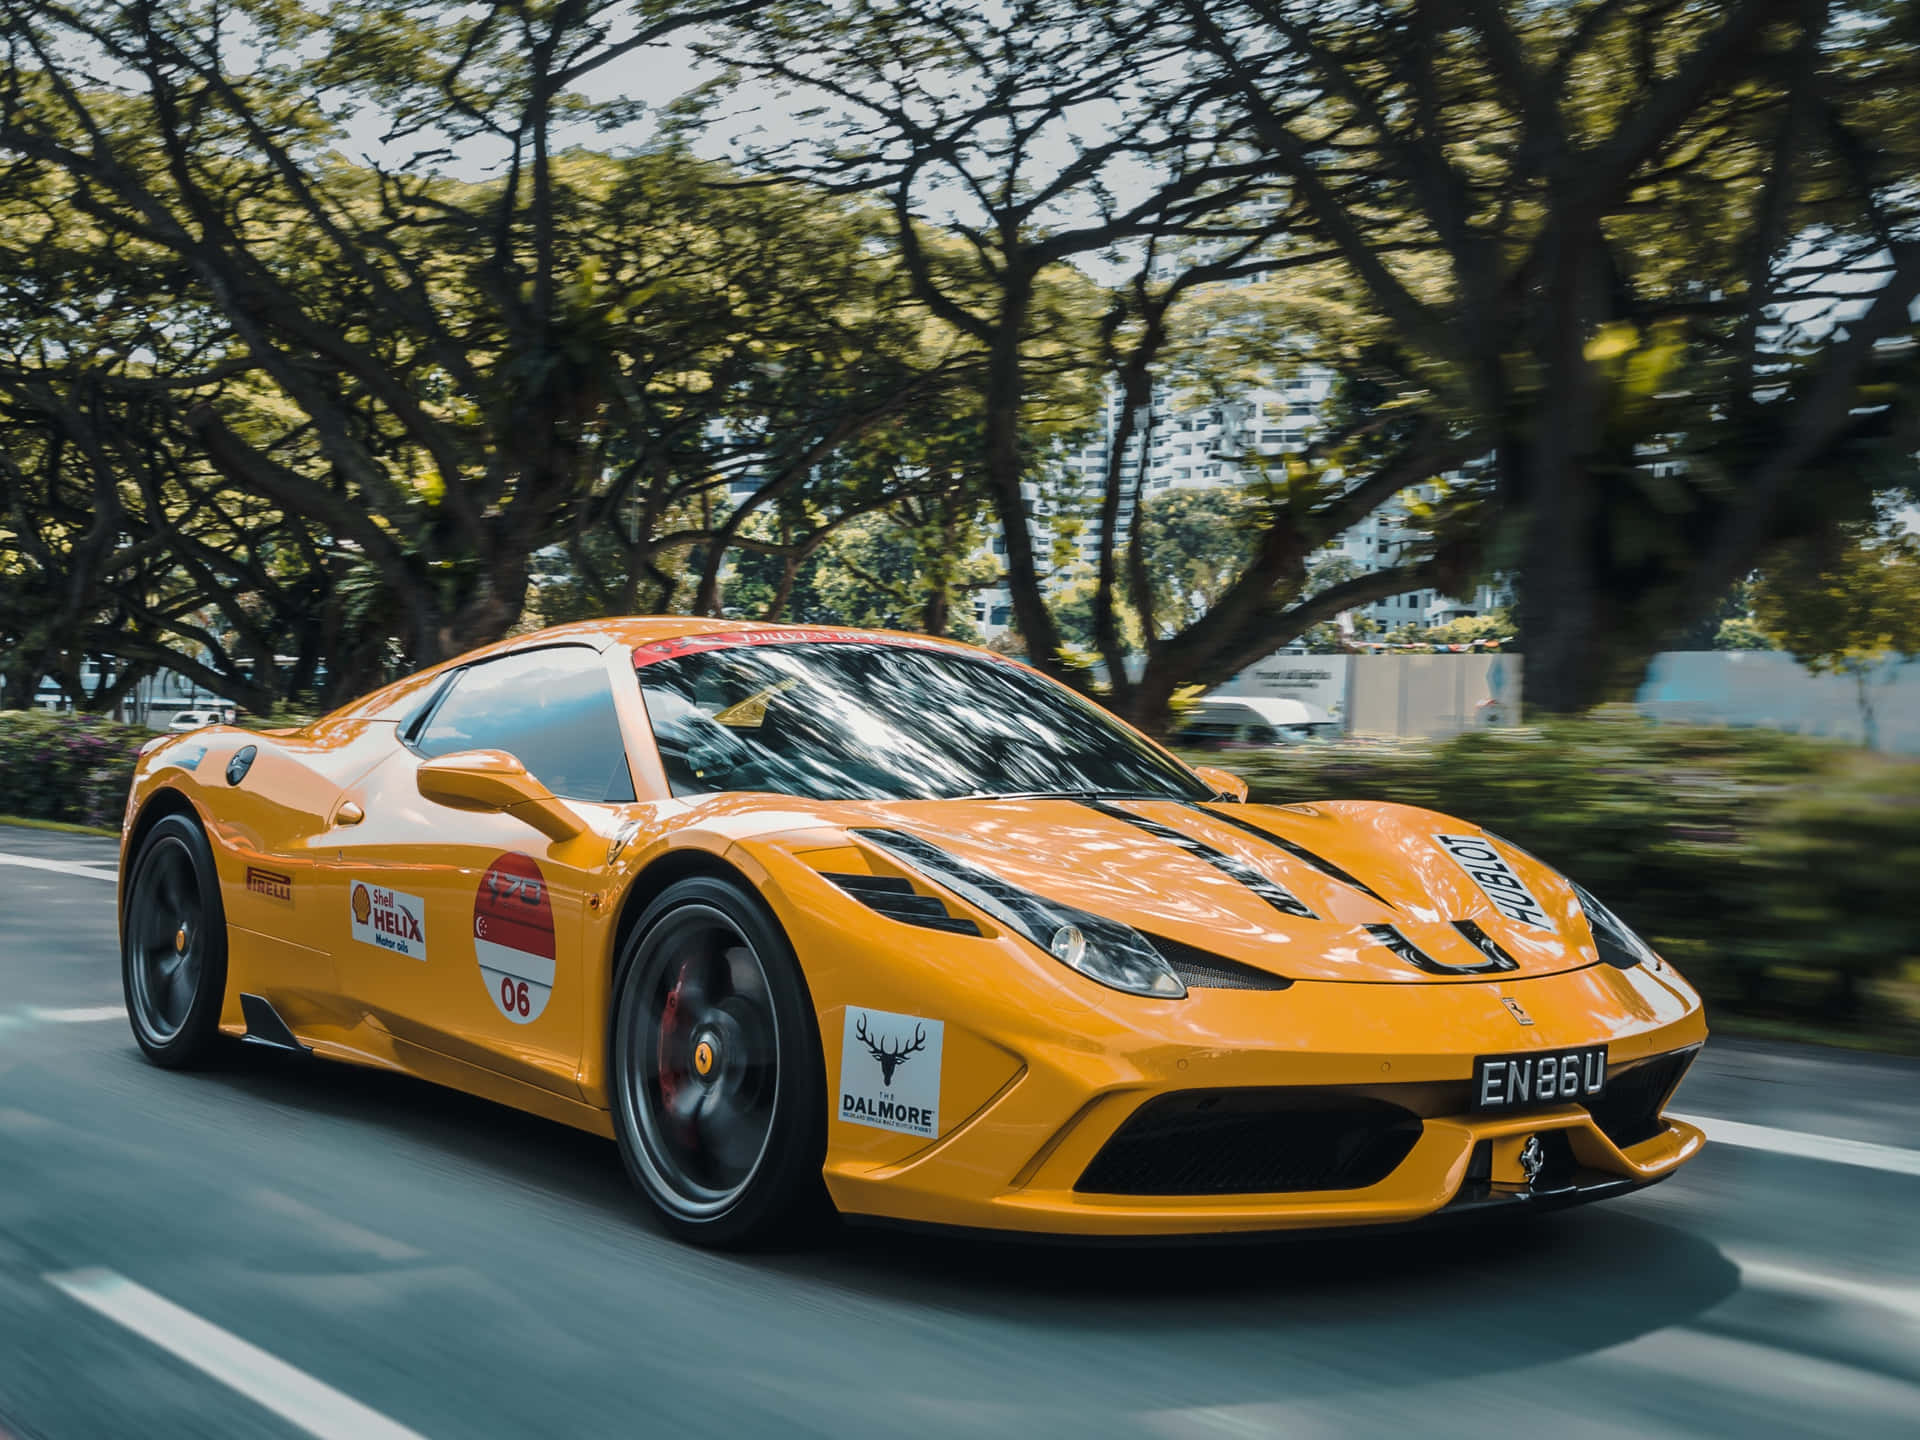 A fiery Ferrari